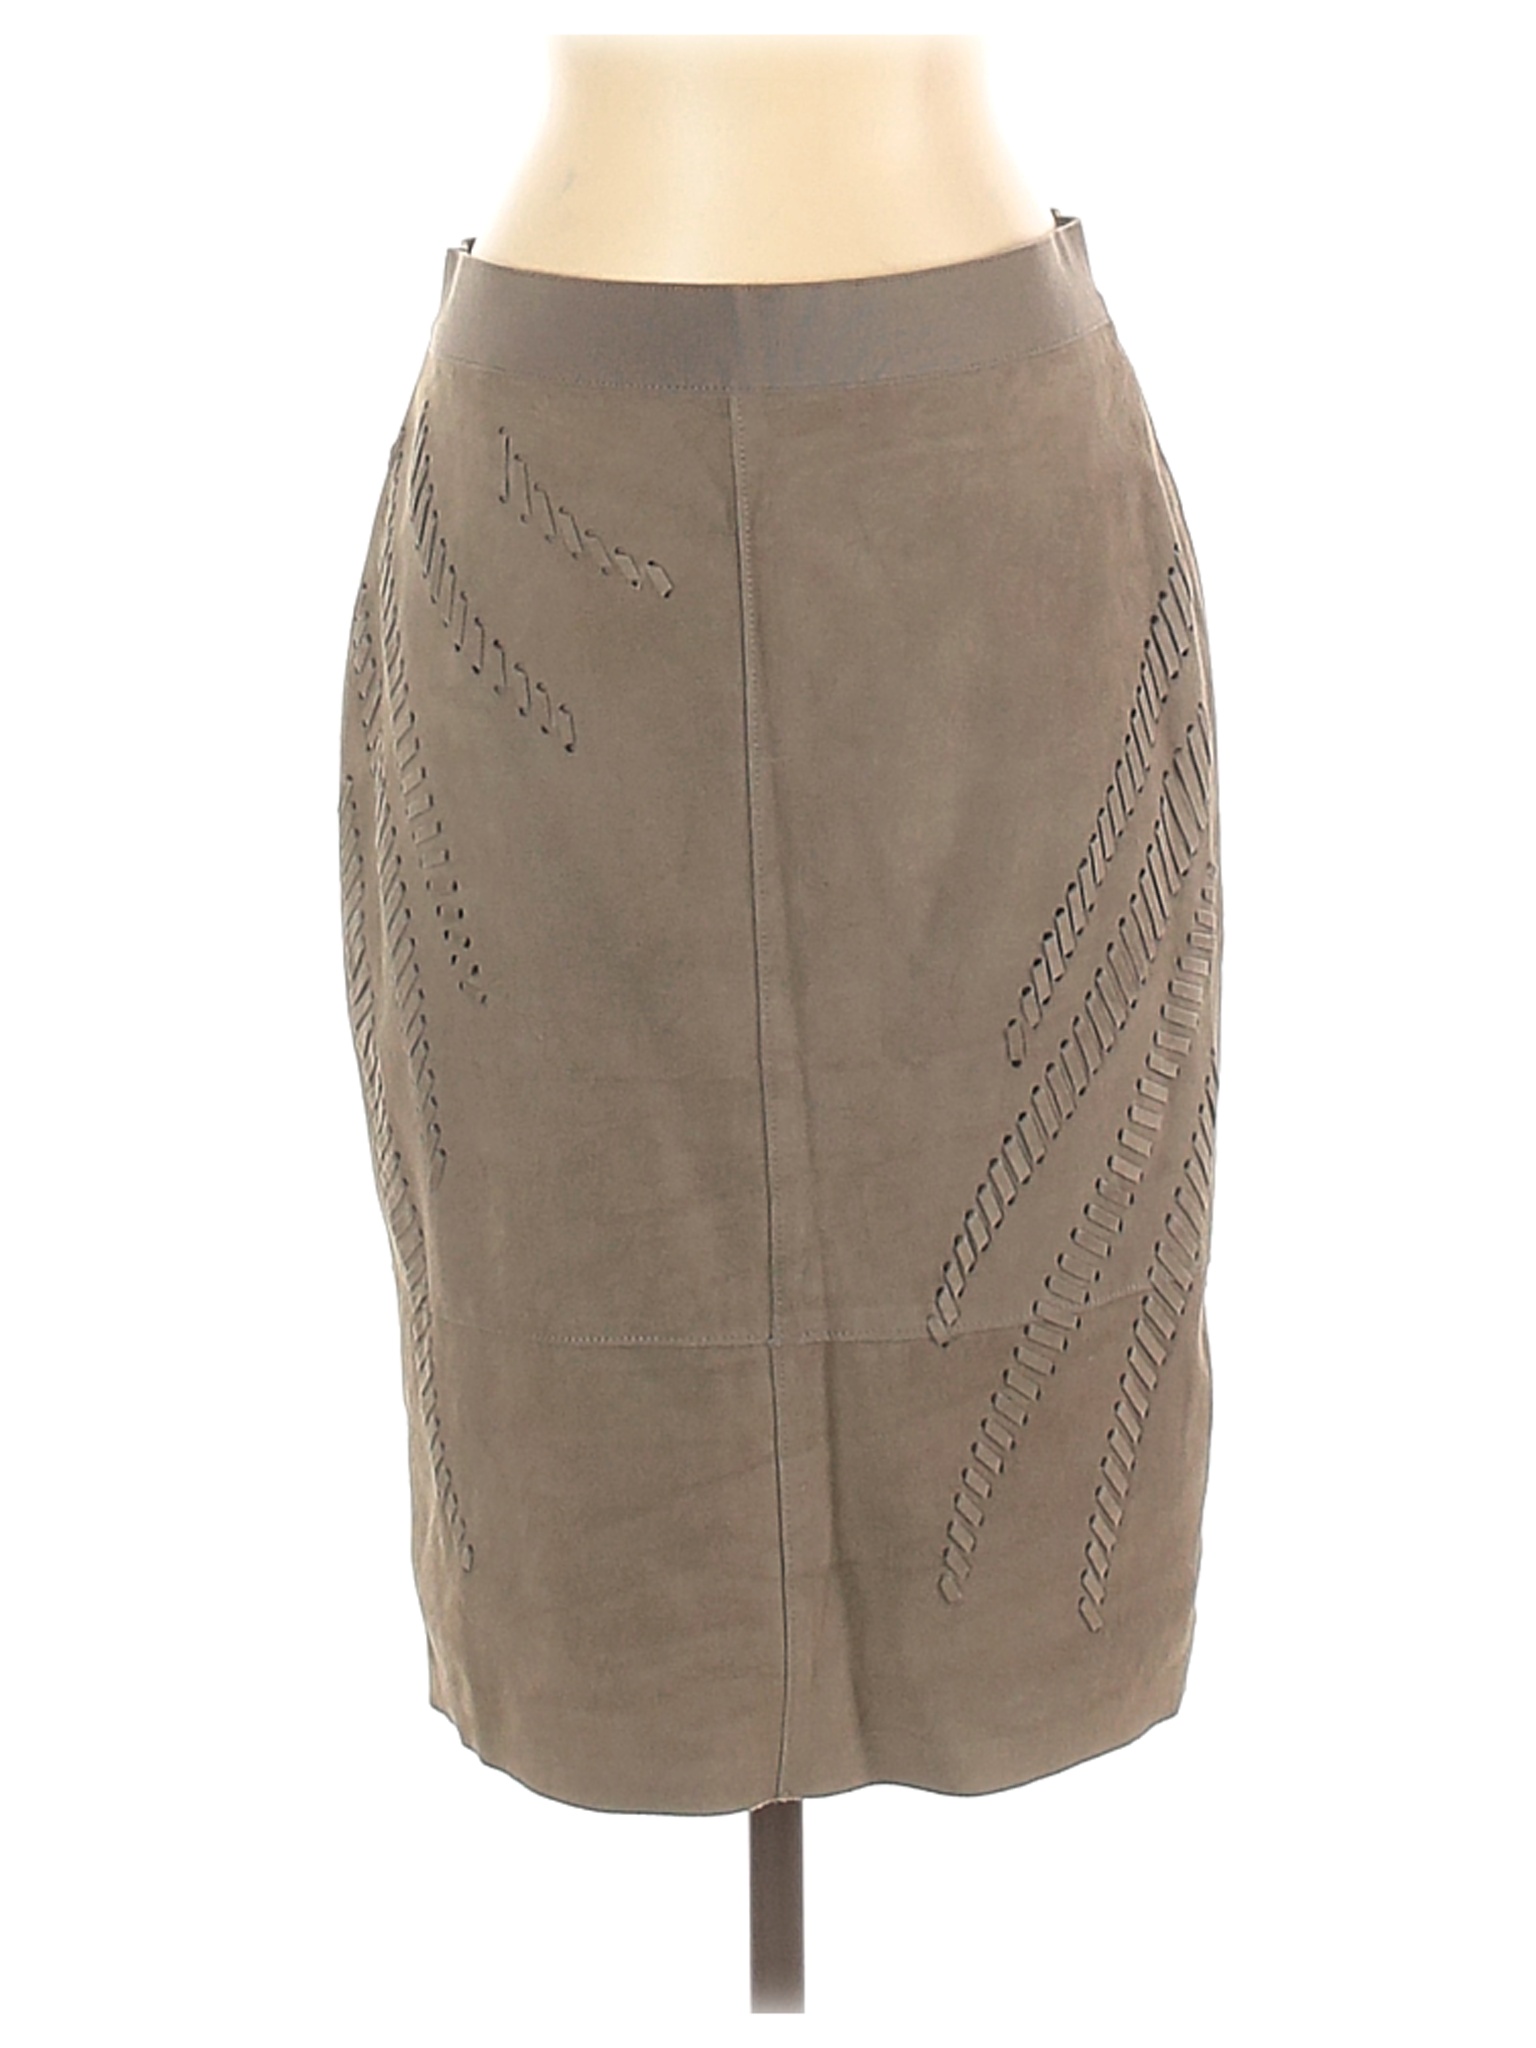 Elie Tahari Women Brown Leather Skirt 4 | eBay